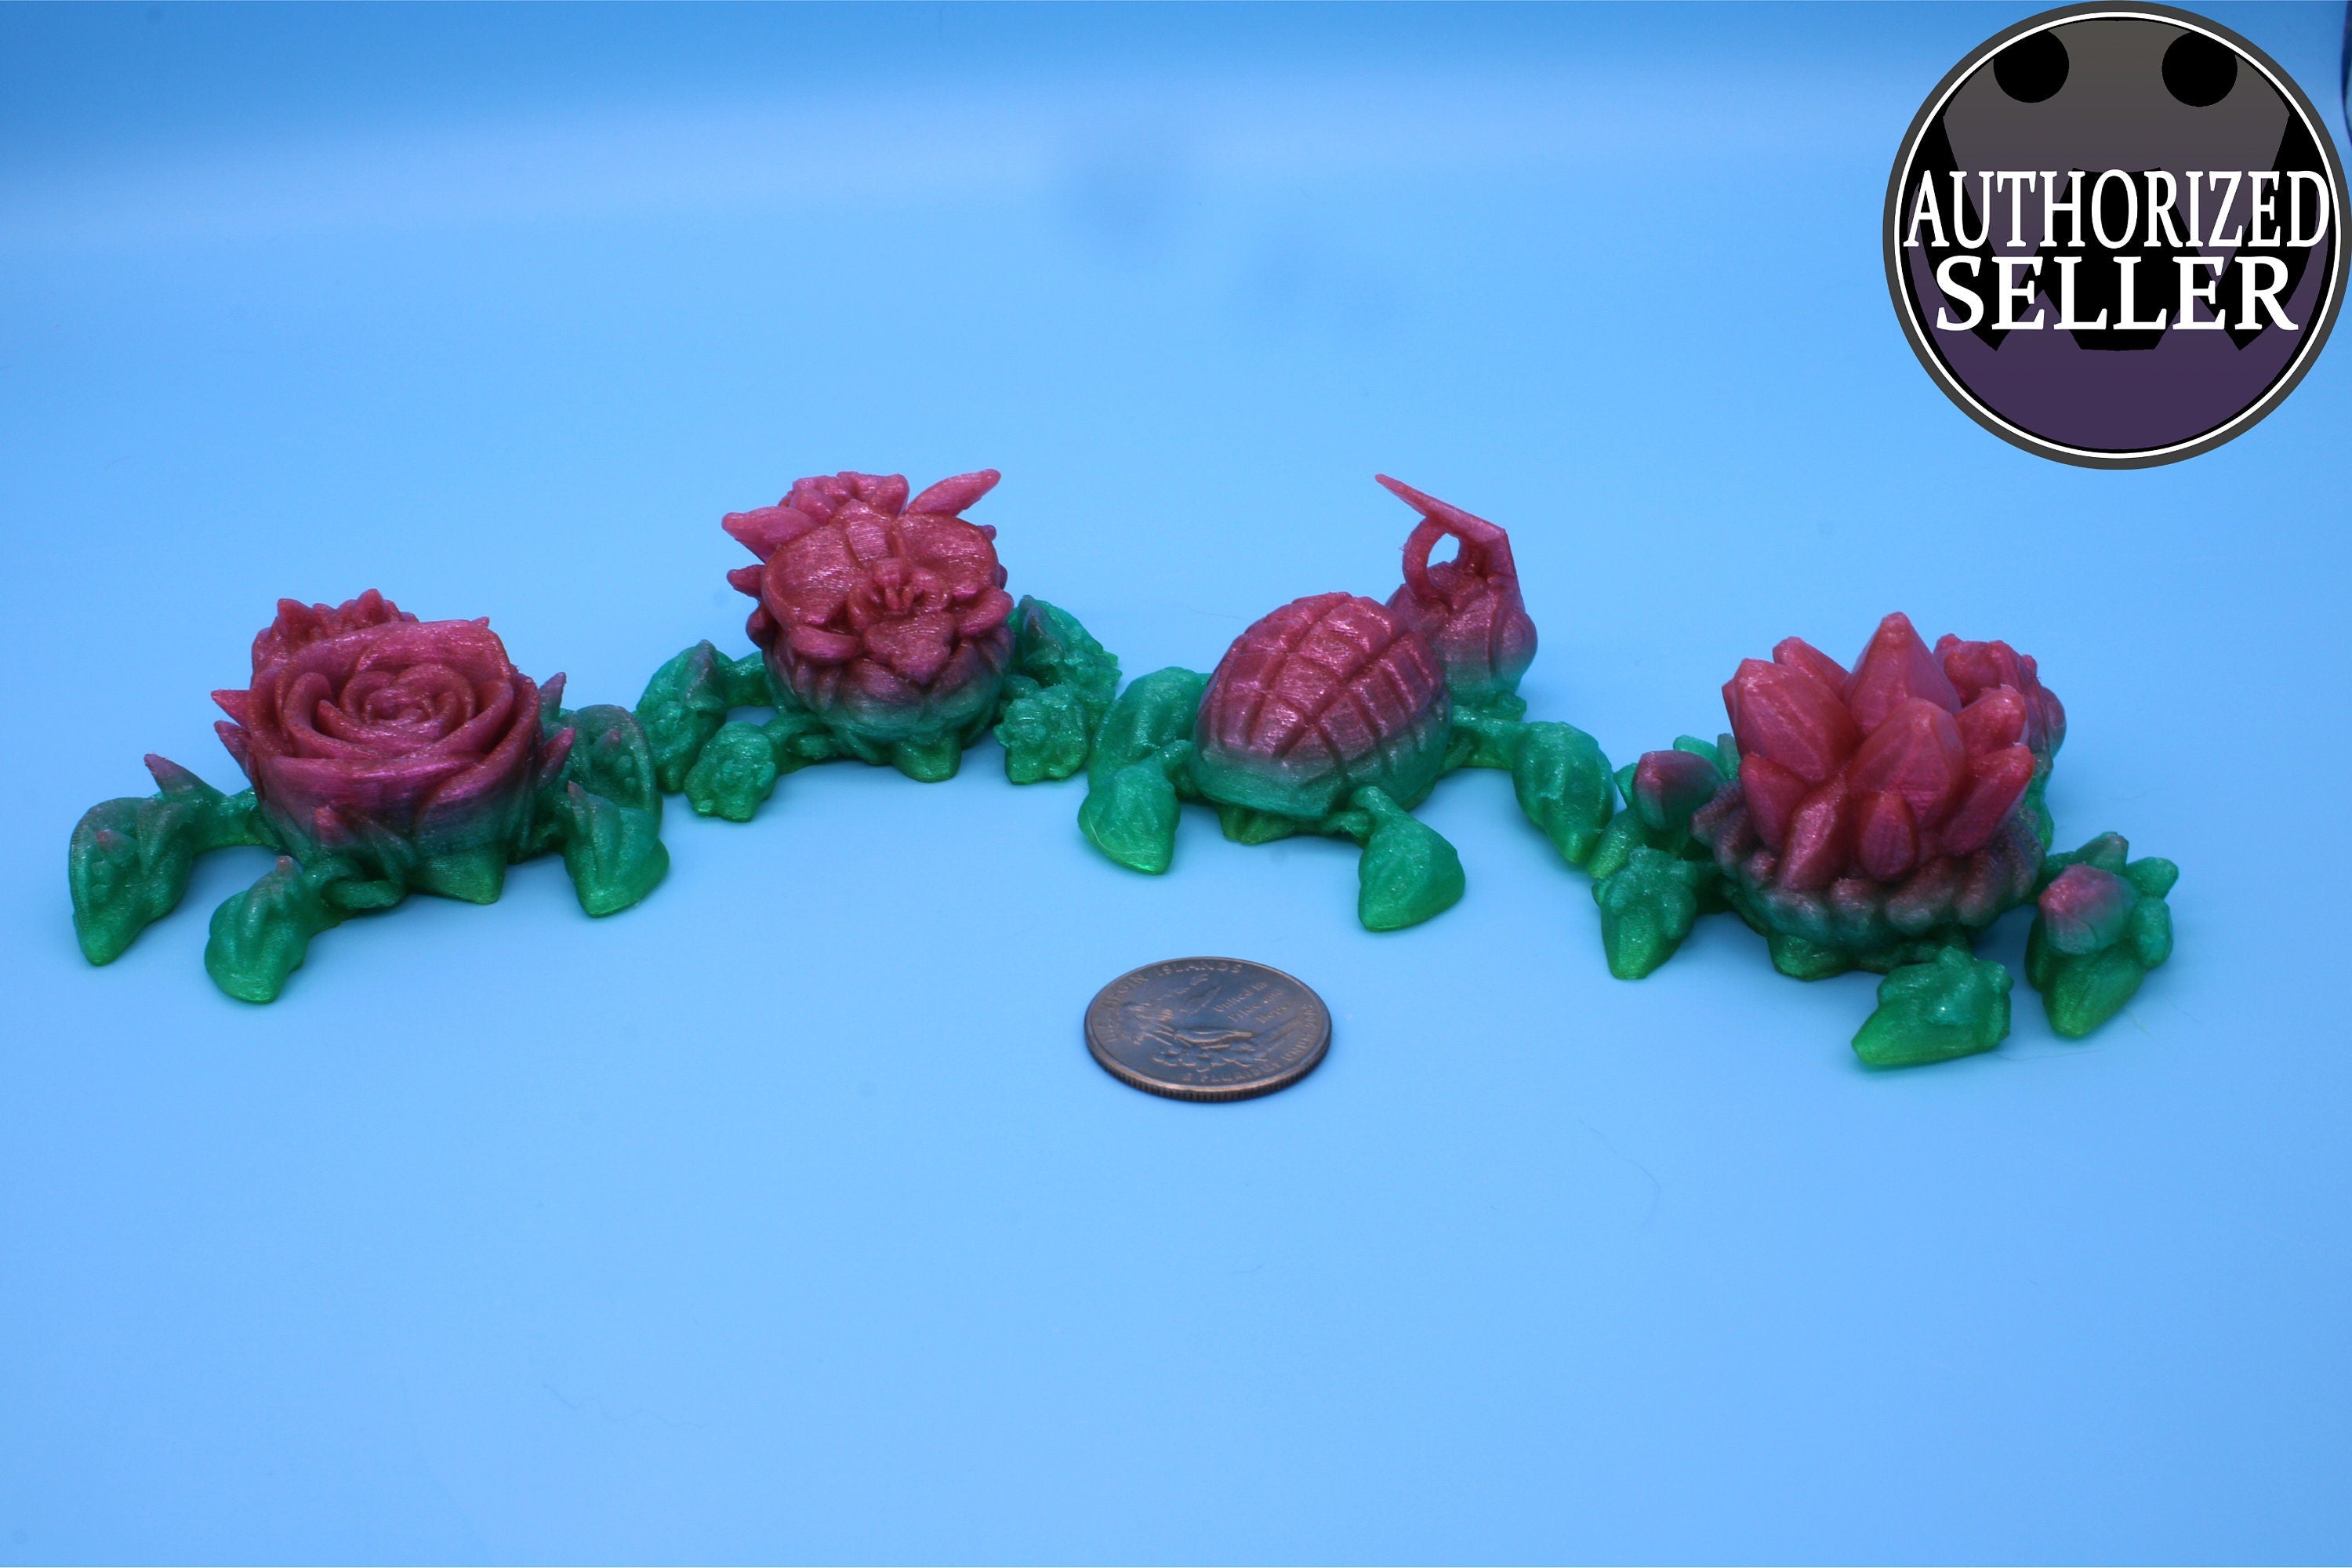 Miniature Turtle 4 Pack | 3D Printed | Grenurtle, Gem Stone, Roseurtle, Orchid Turtles | Fidget Toy | Flexi Turtle.